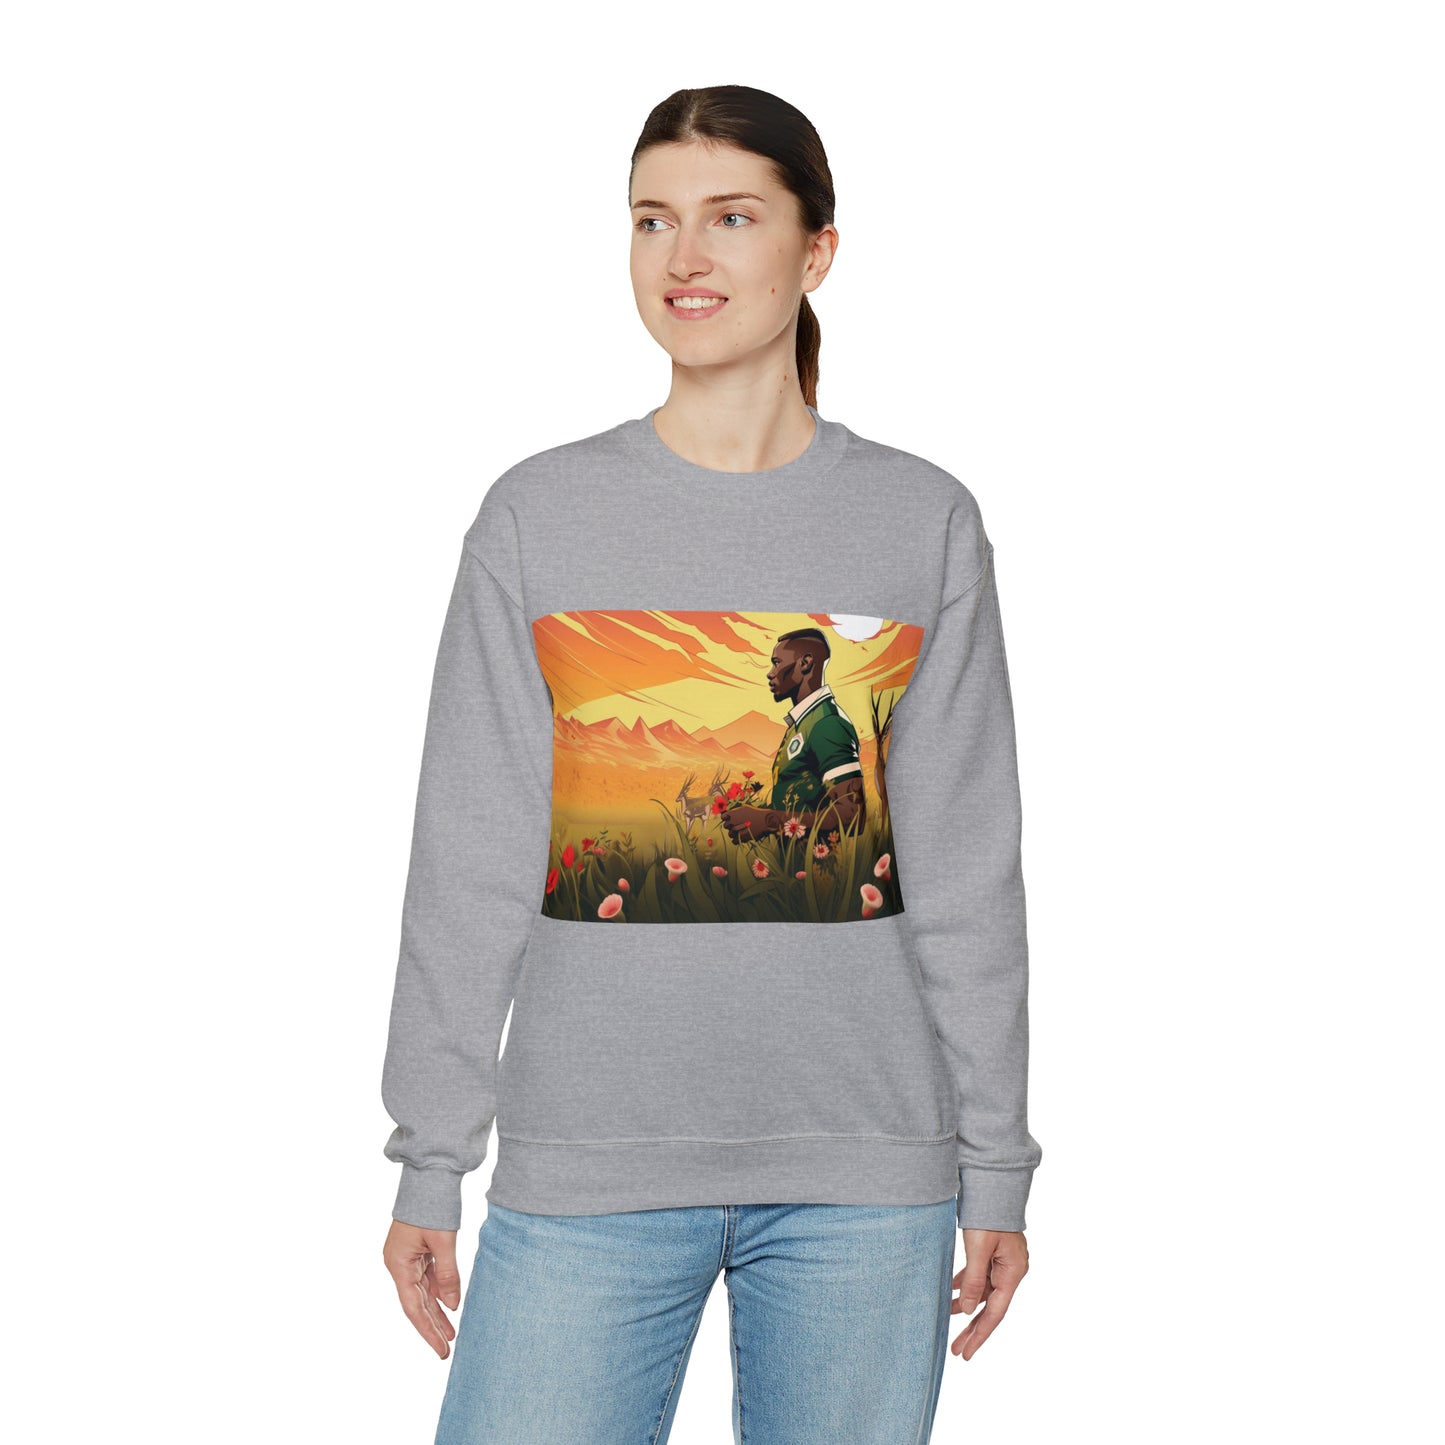 Beautiful Boks - light sweatshirts